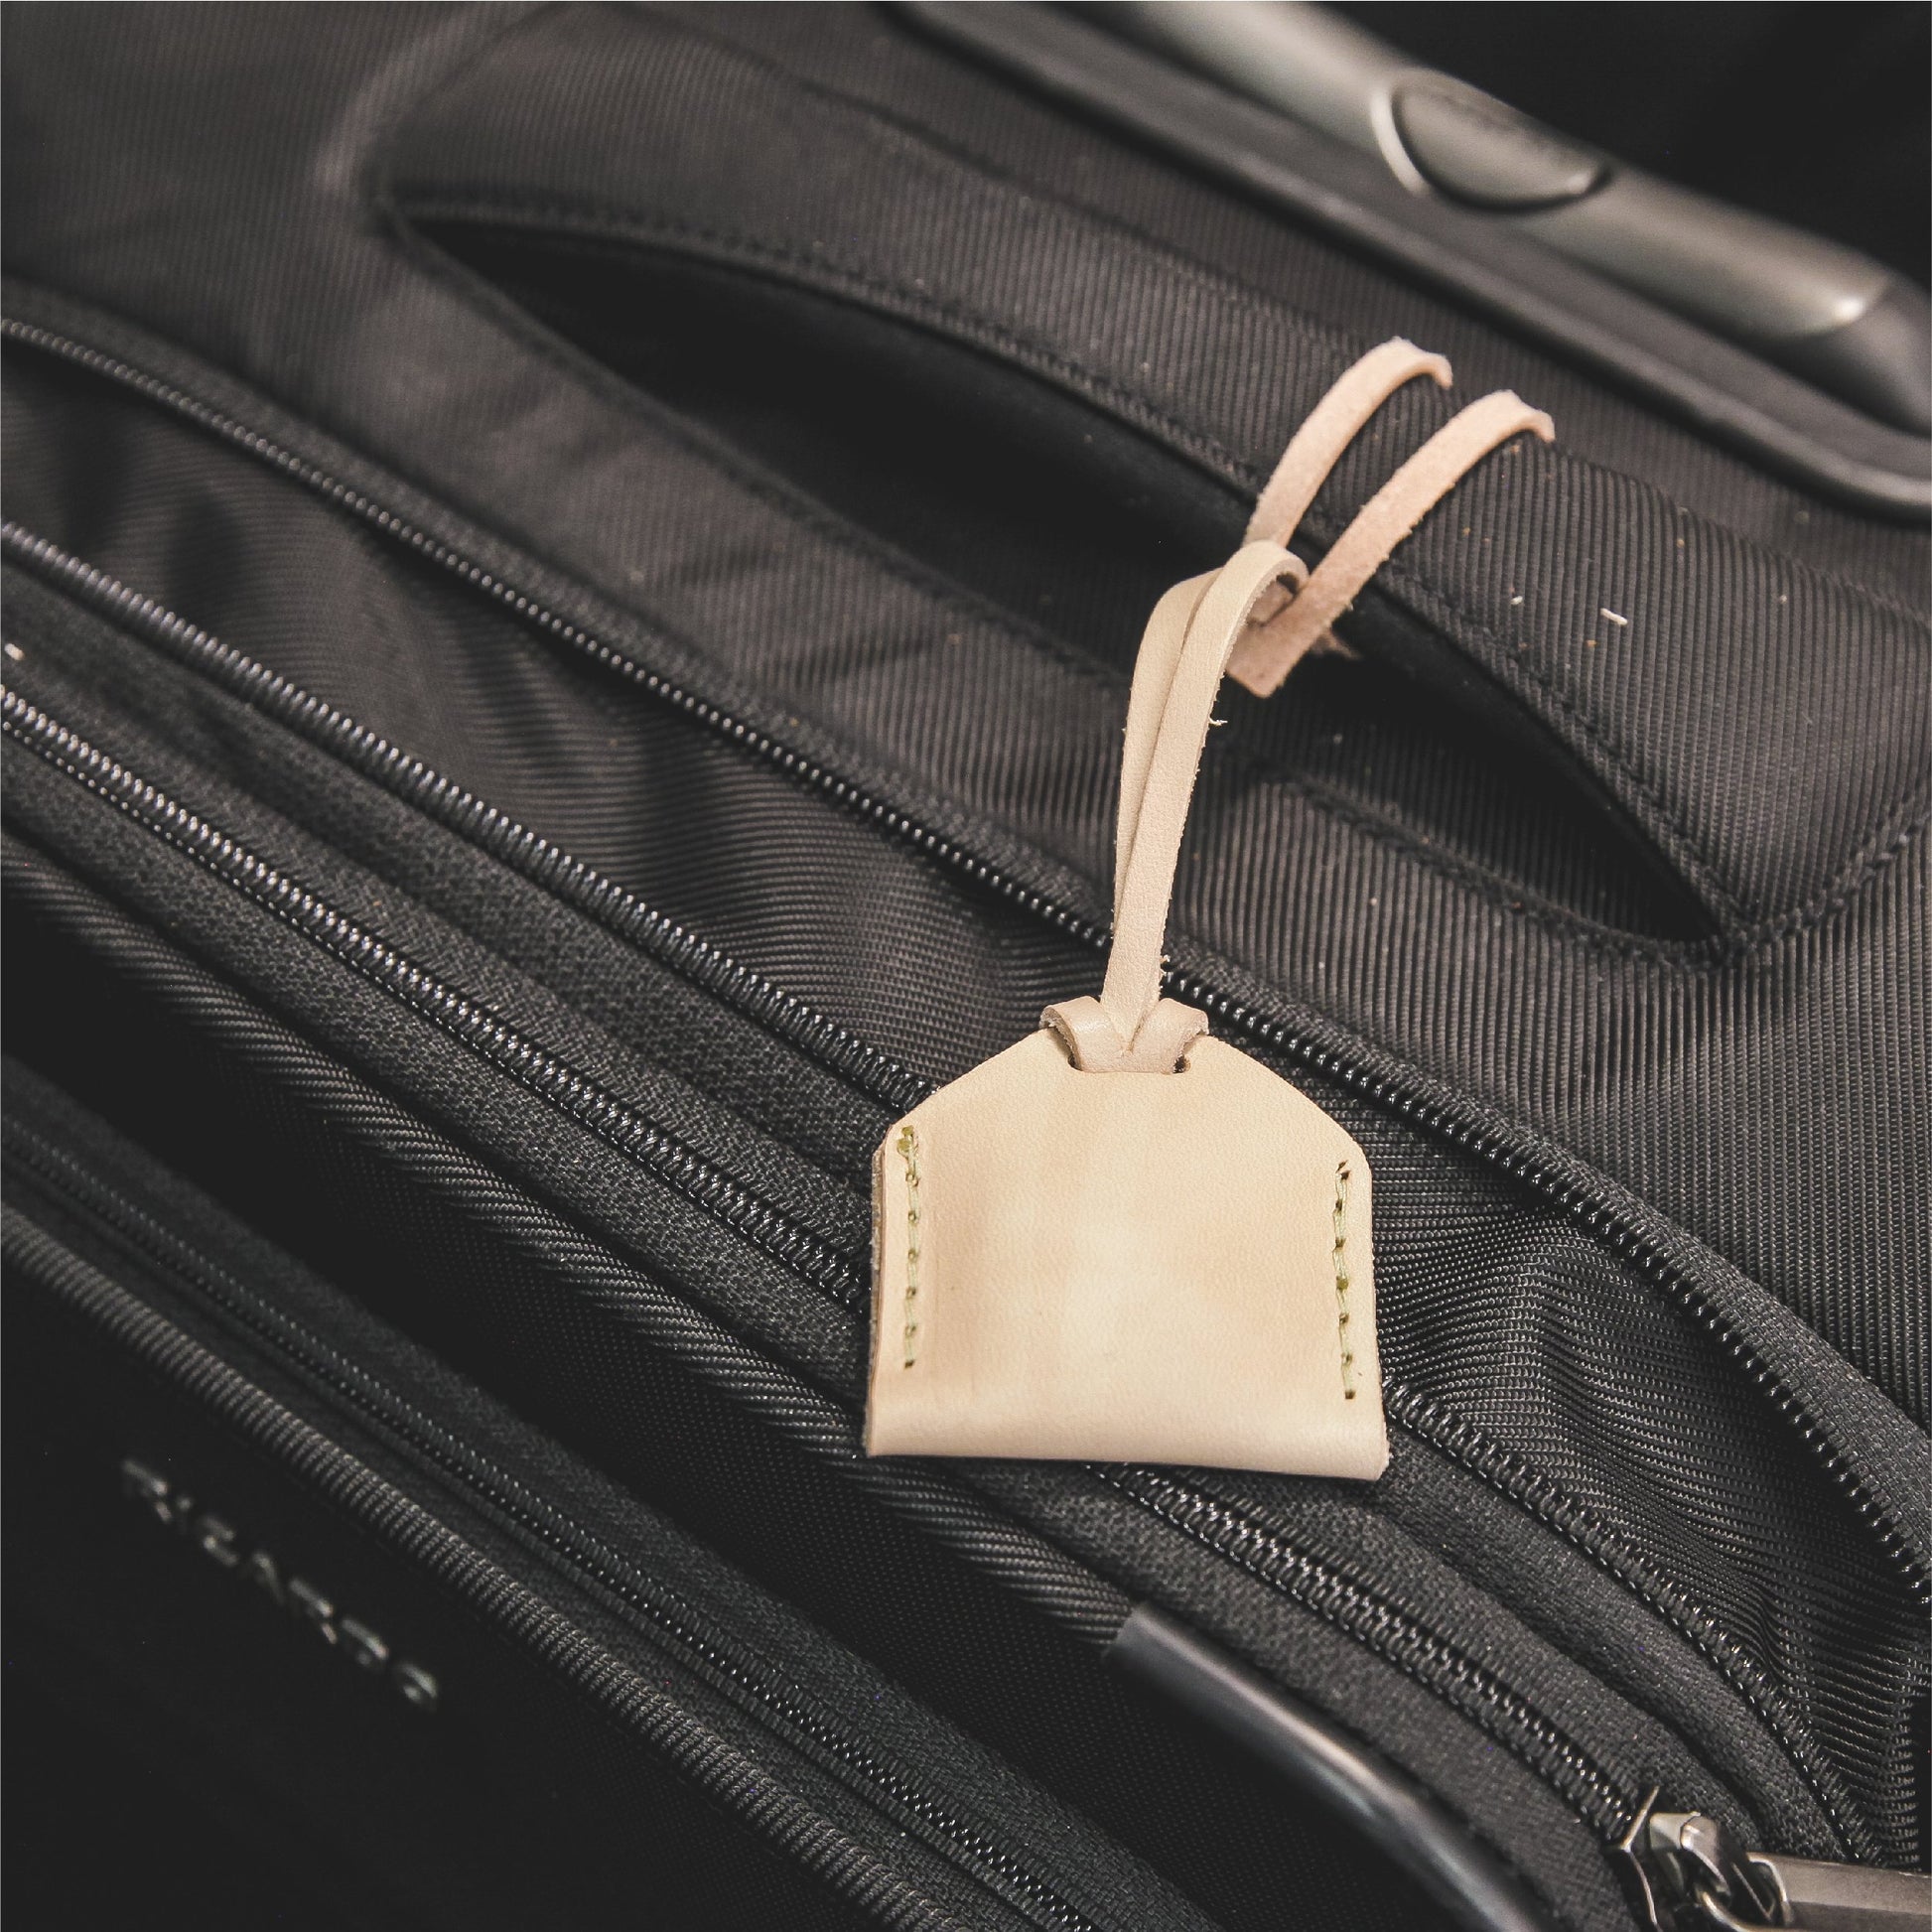 Handmade Real Vachetta Leather Key Bell Clochette Luggage Tag For Handbags